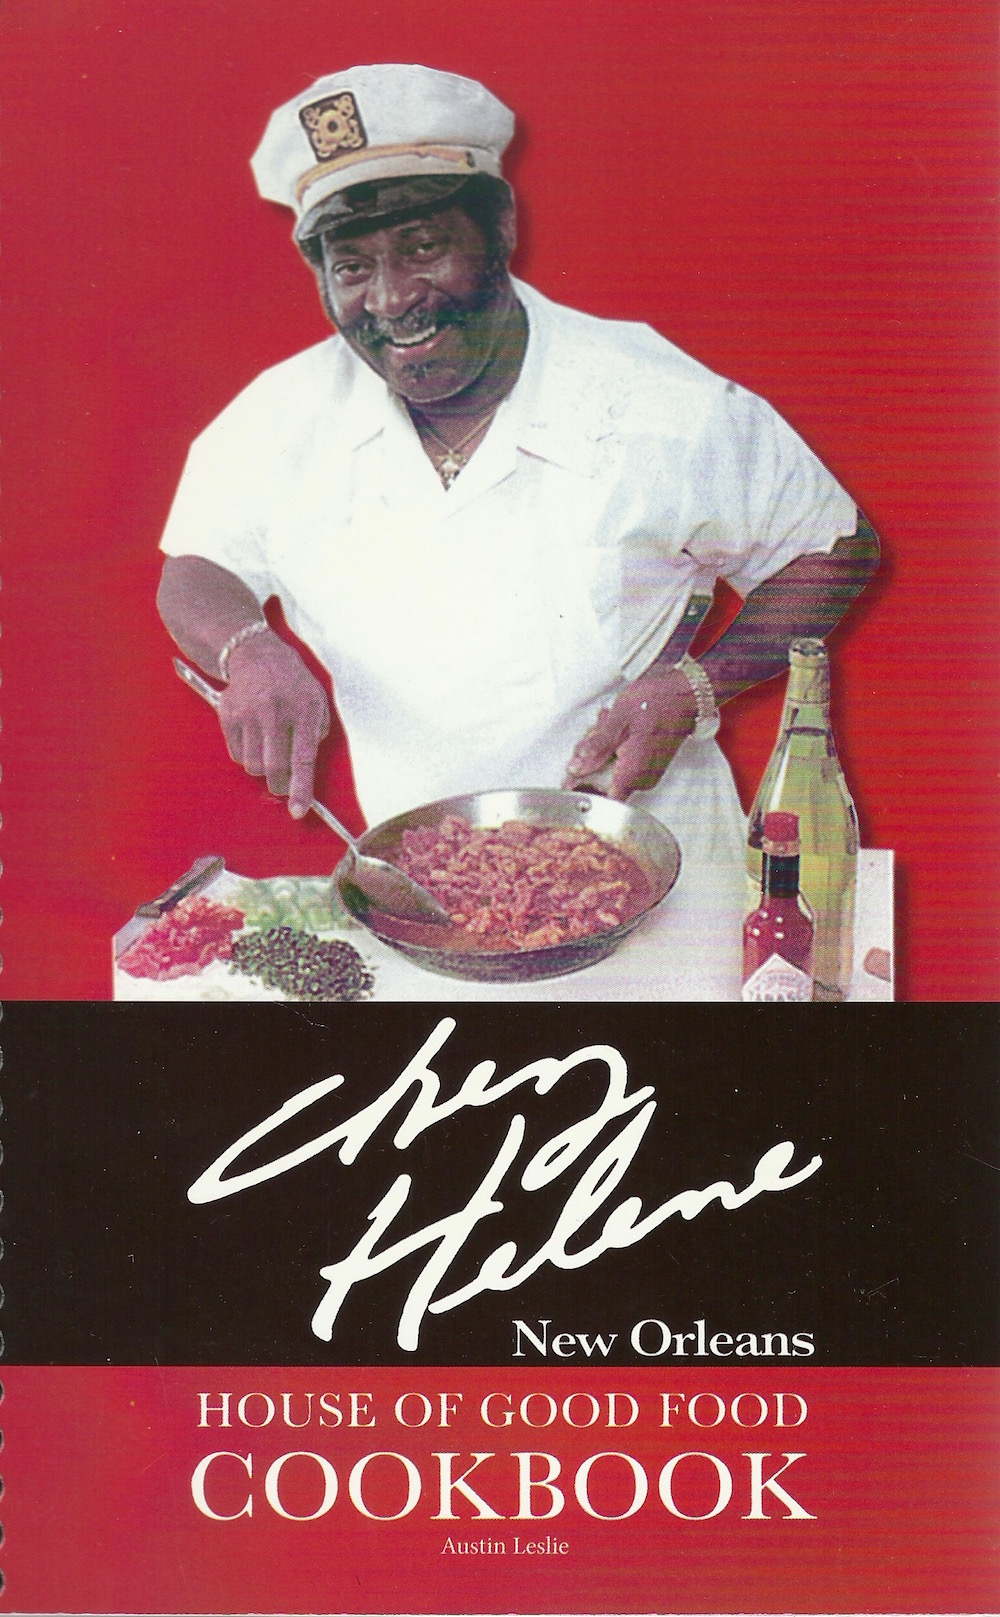 Chez Helene New Orleans House of Good FOod Cookbook by Austin Leslie de Simonin Publications New Orleans, Louisana 1984